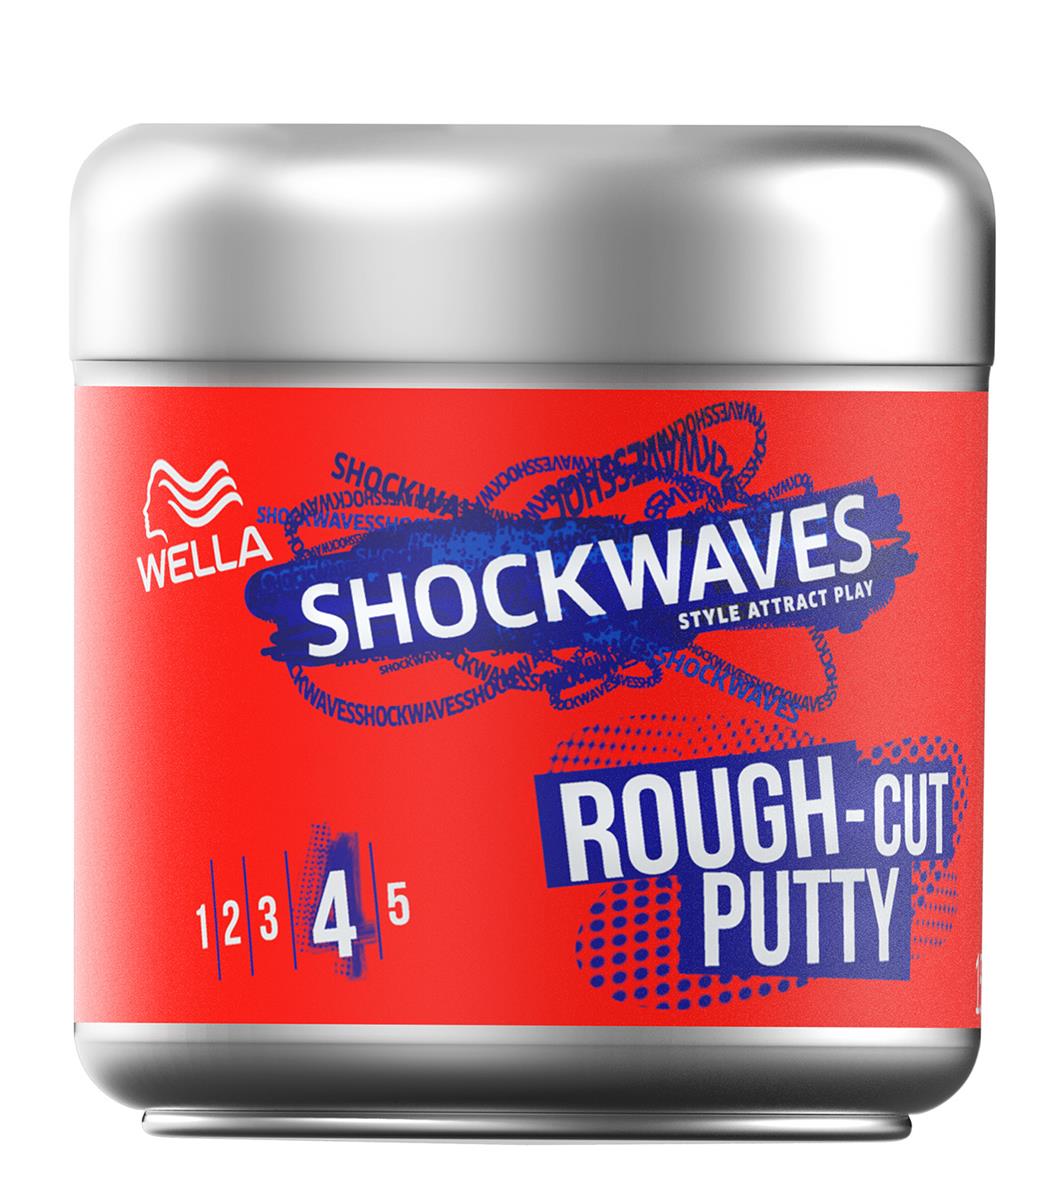 Wella Shockwaves Pasta do włosów 150ml rough-cut p